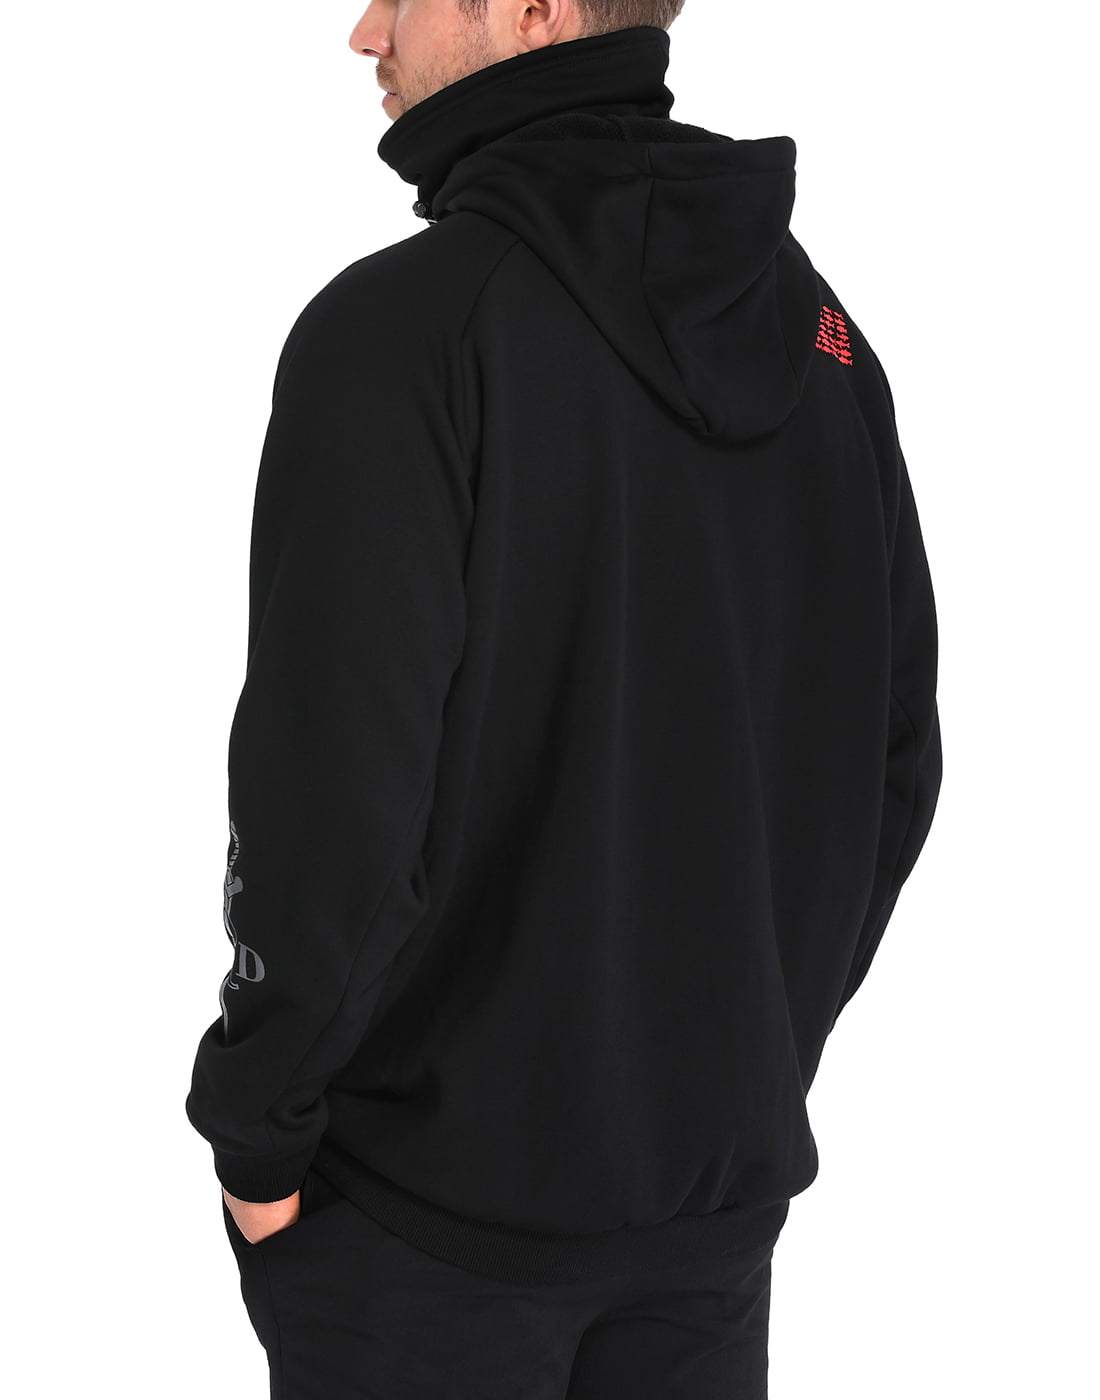 LRD Fleece Hoodie with Mask for Men Built in Gaiter Tactical